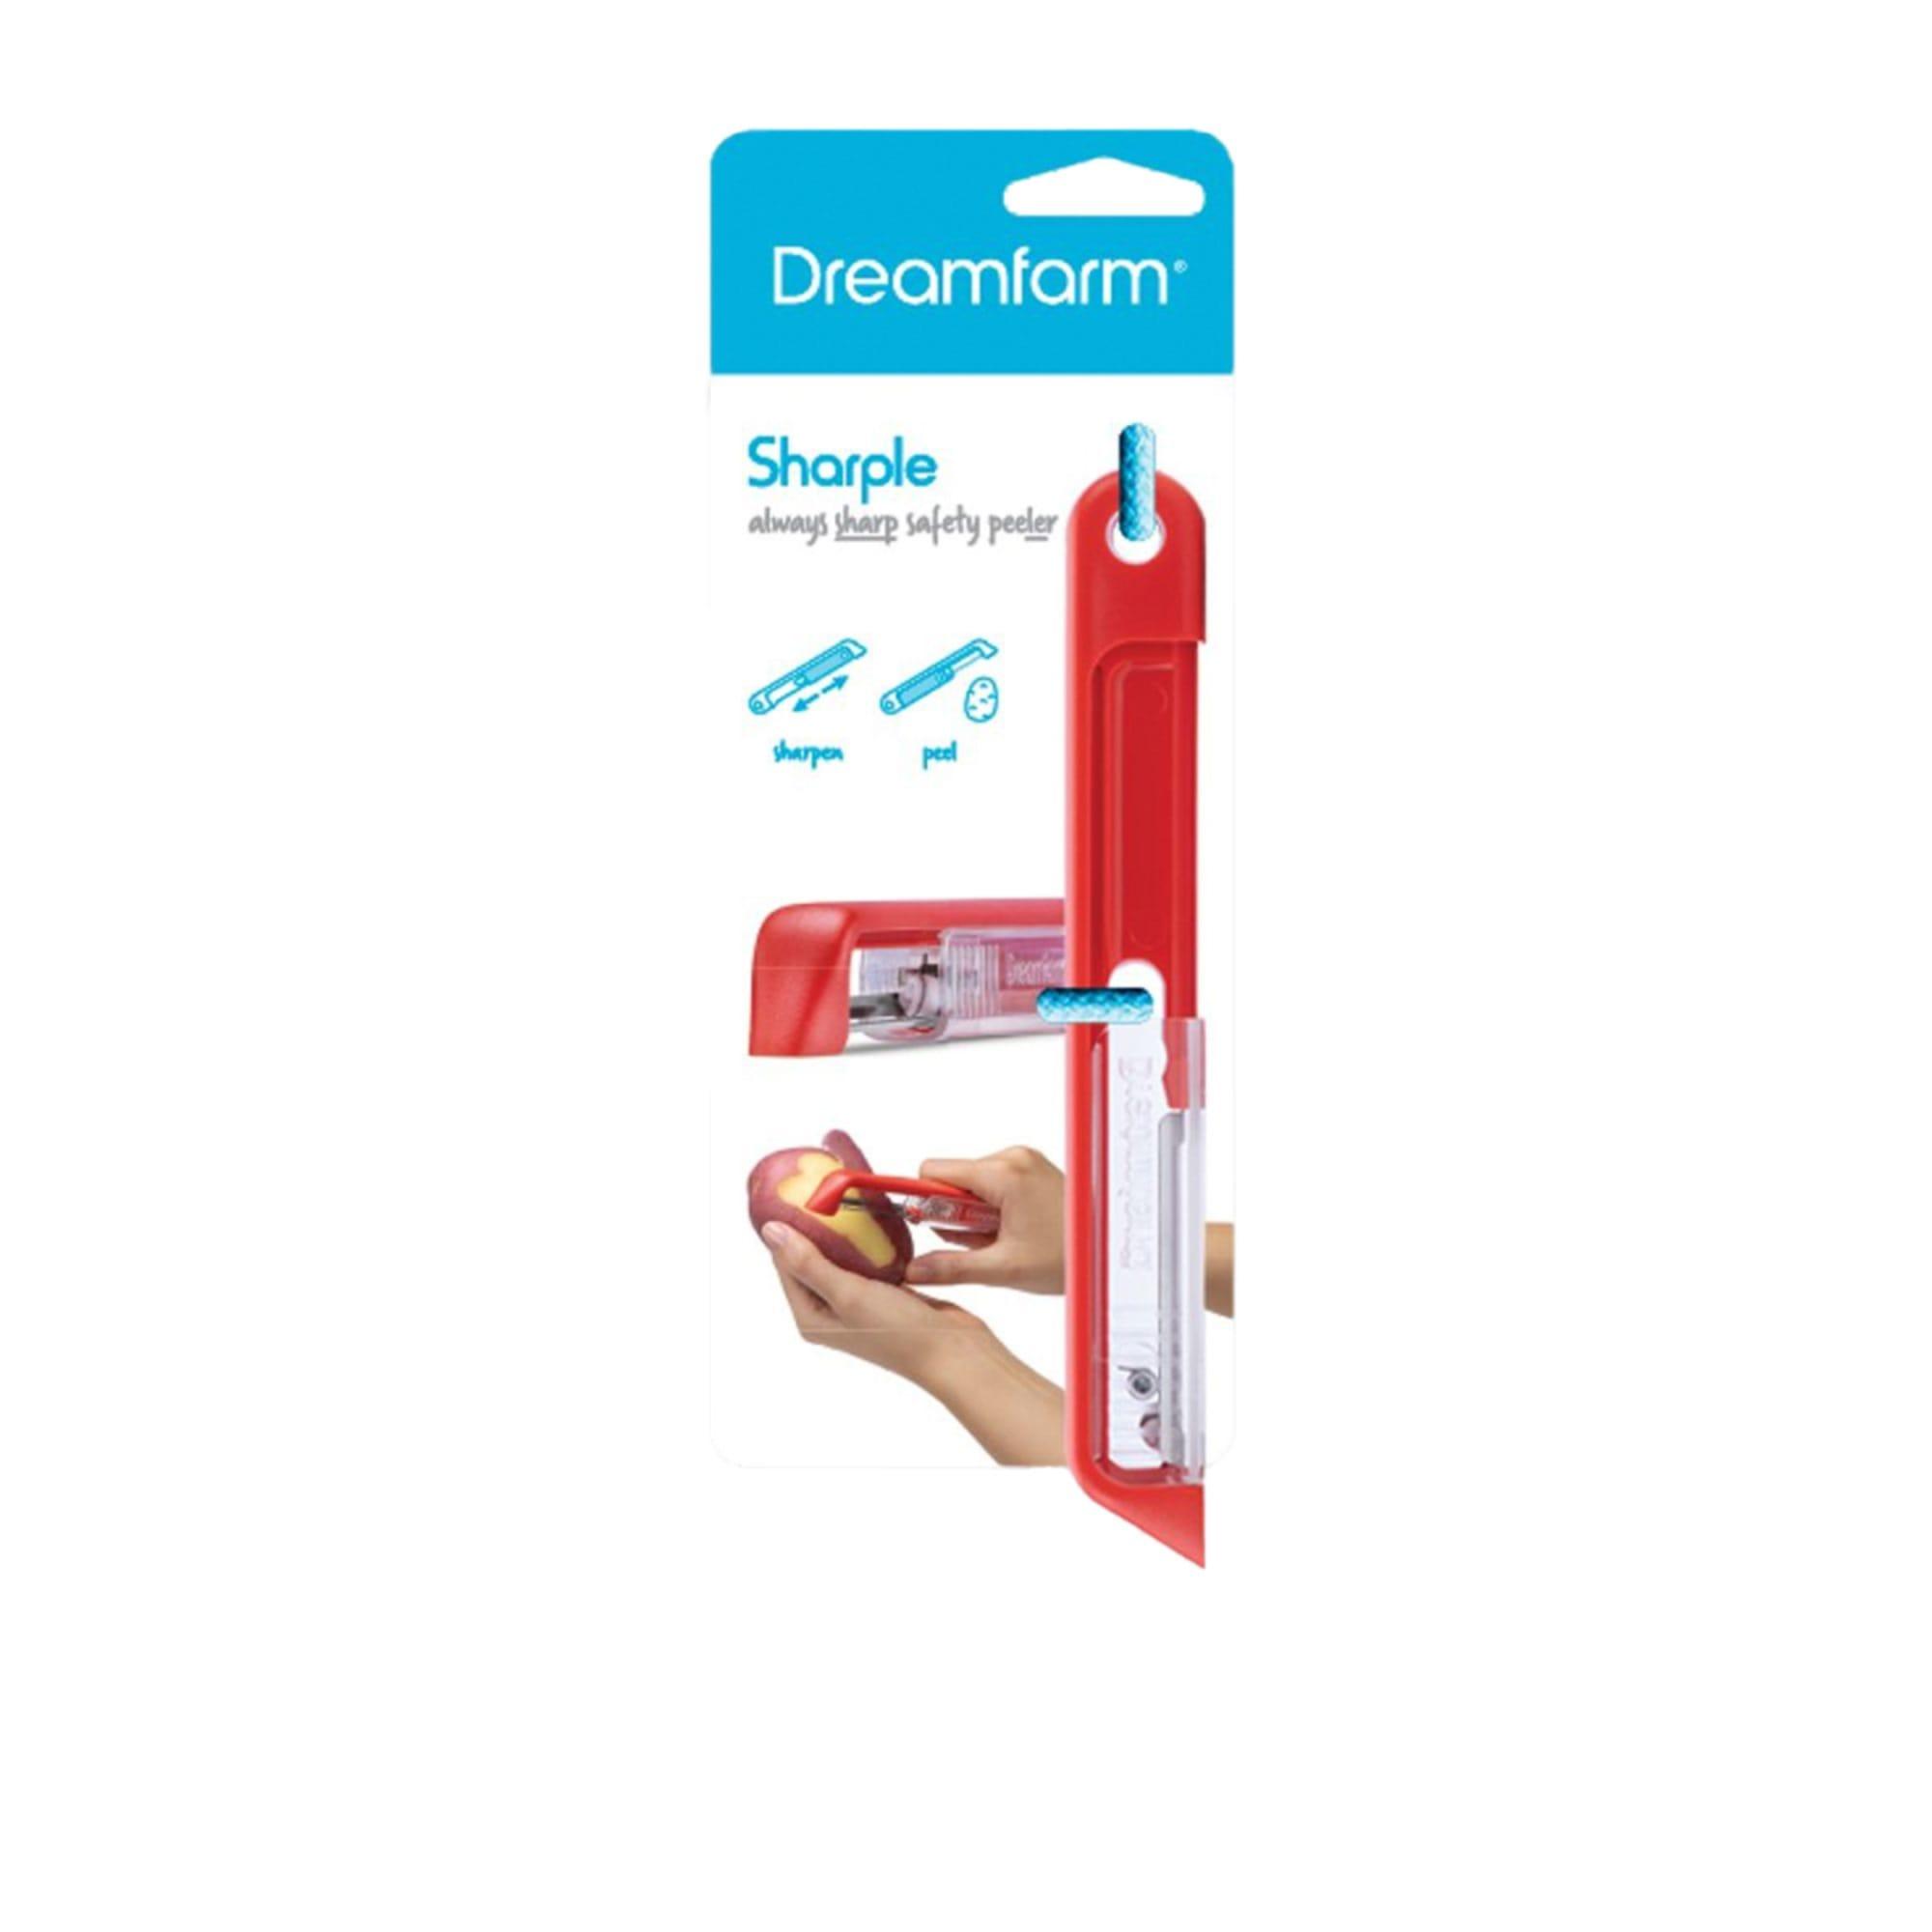 Dreamfarm Sharple Sharp Safety Peeler Red Image 8